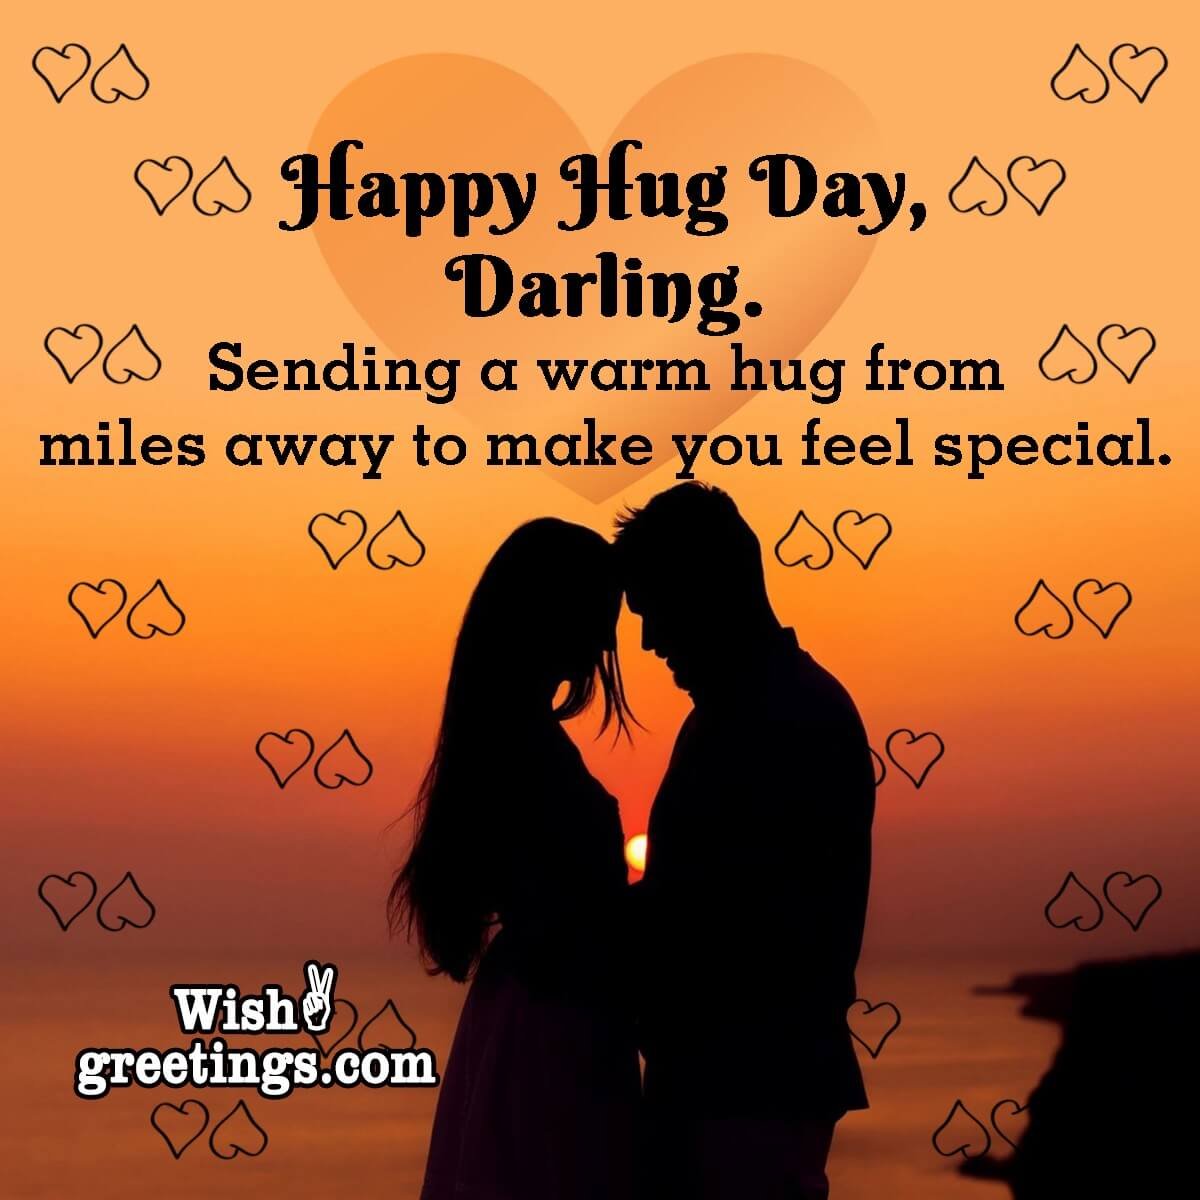 Happy Hug Day, Darling